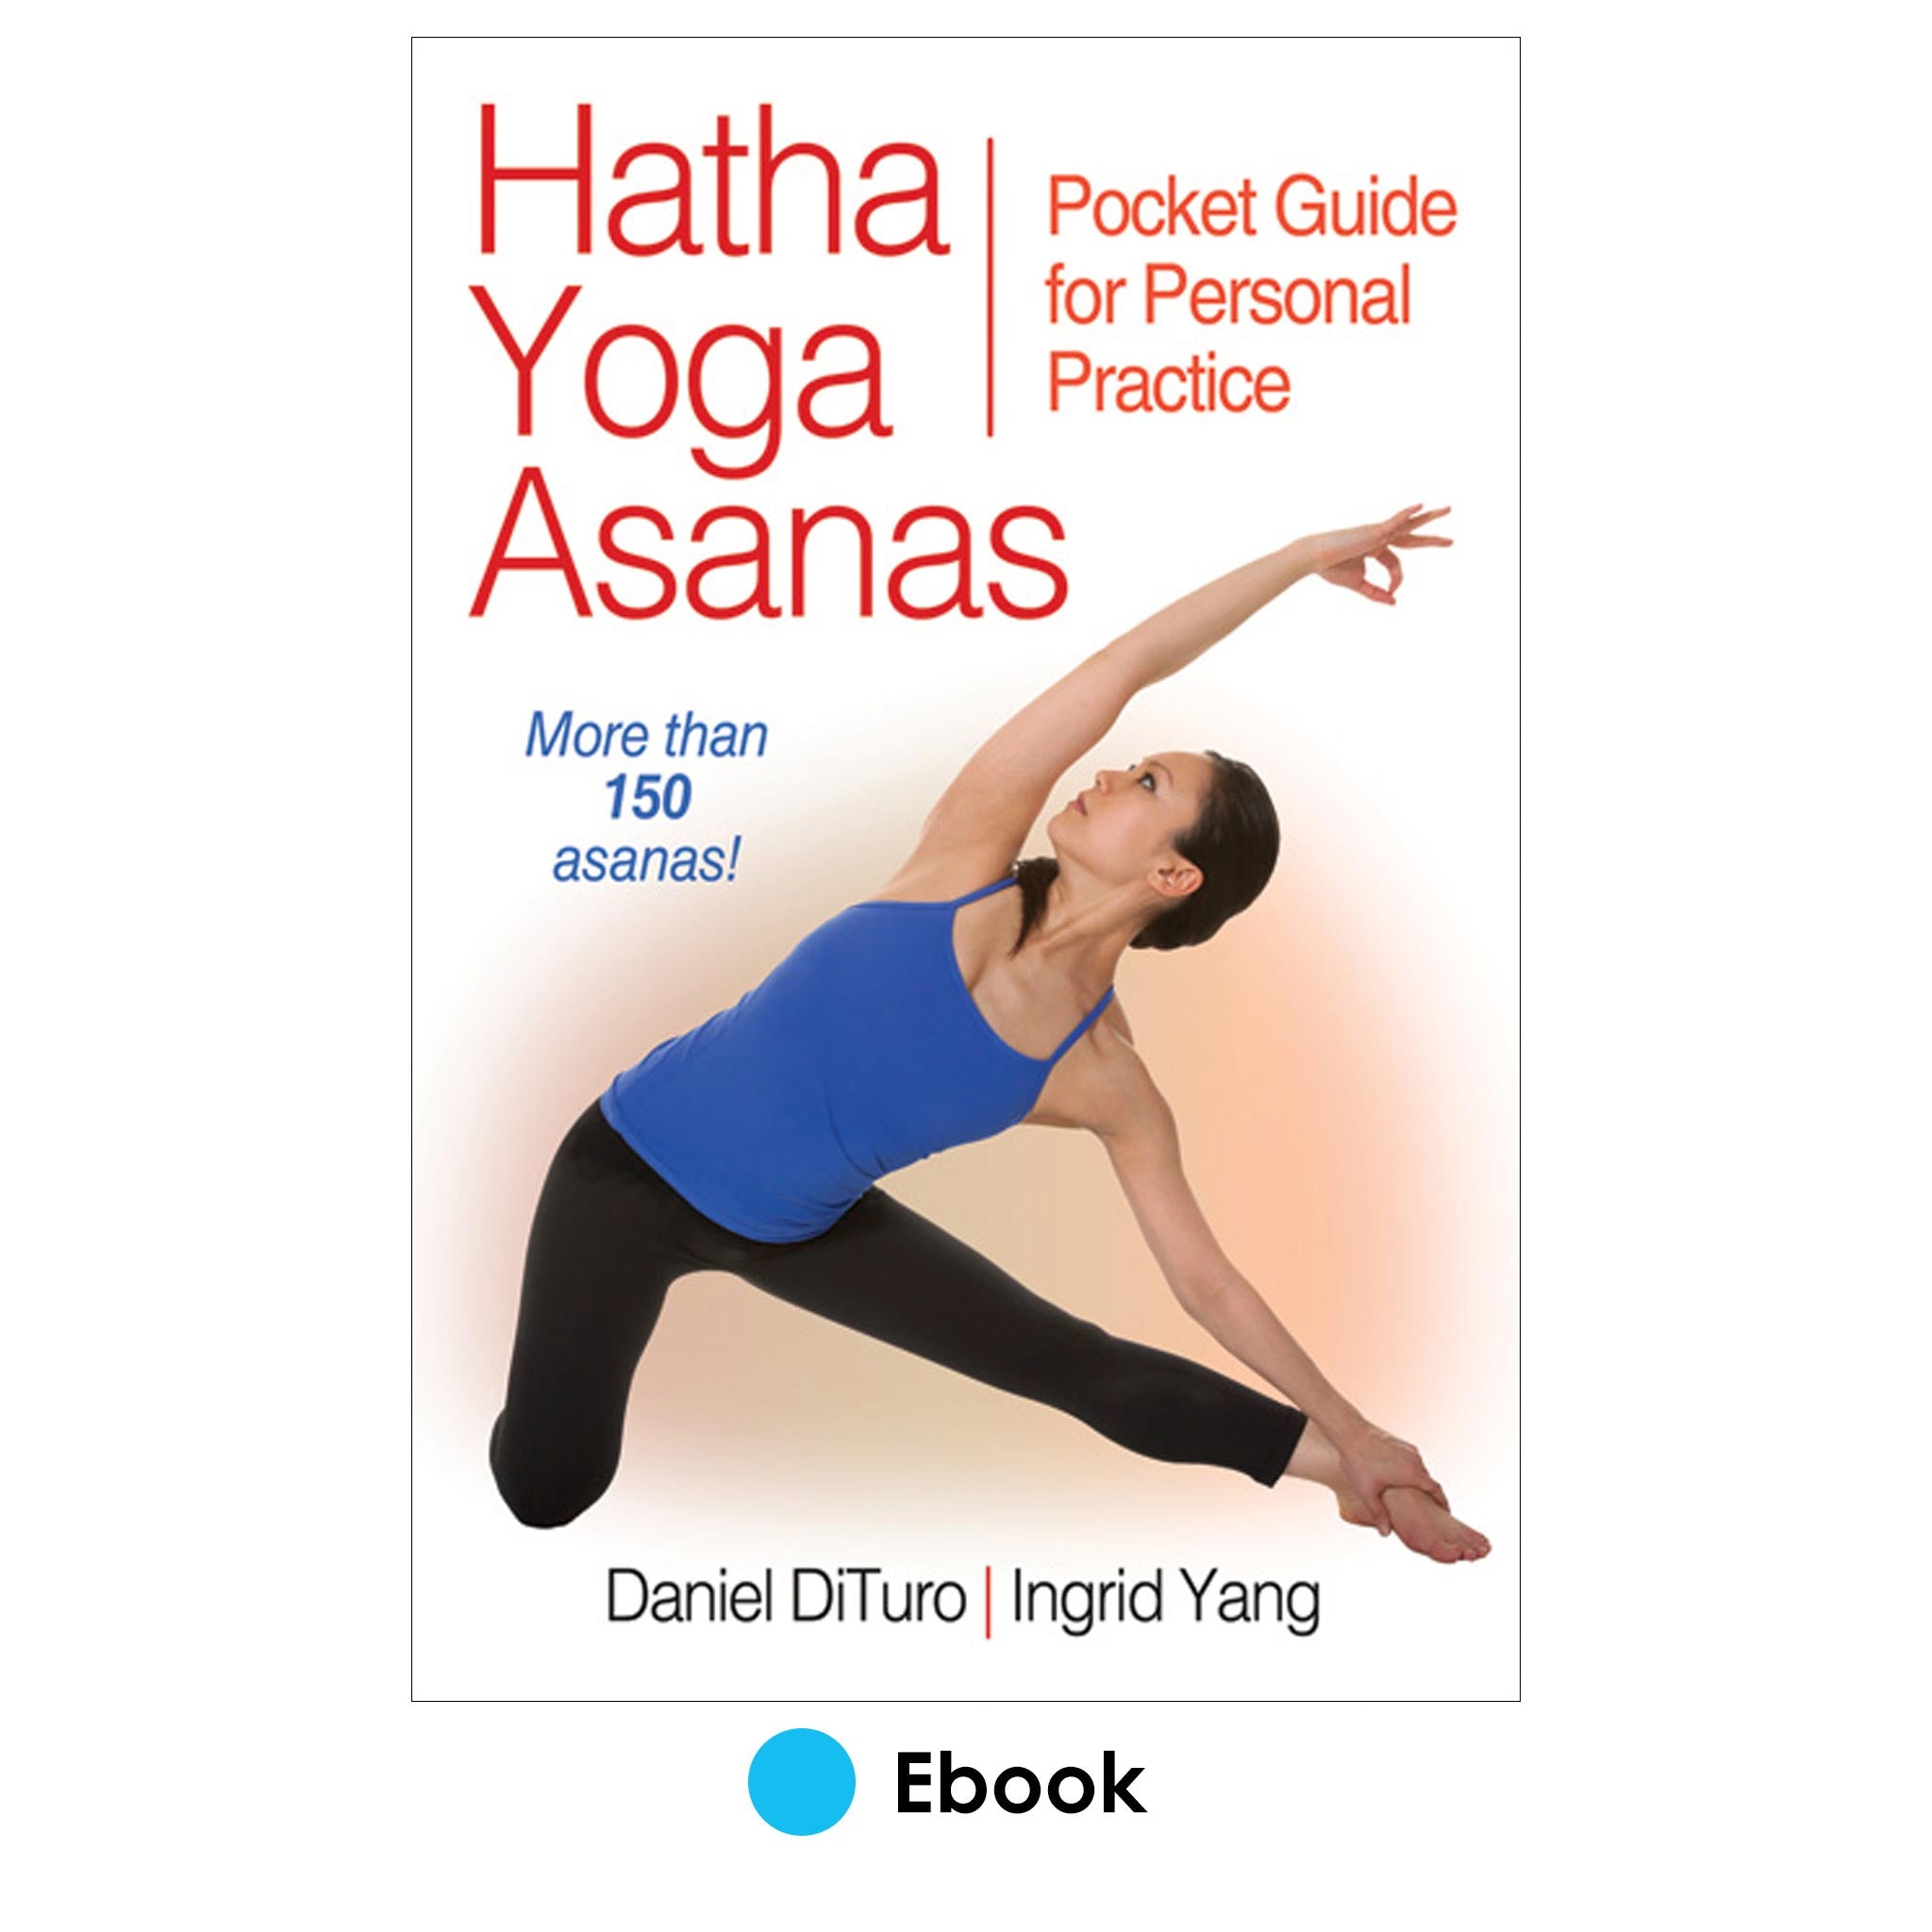 24 Balancing Hatha Yoga Poses With Sanskrit and English Pose Names:  Printable PDF, A4, Letter. -  Norway